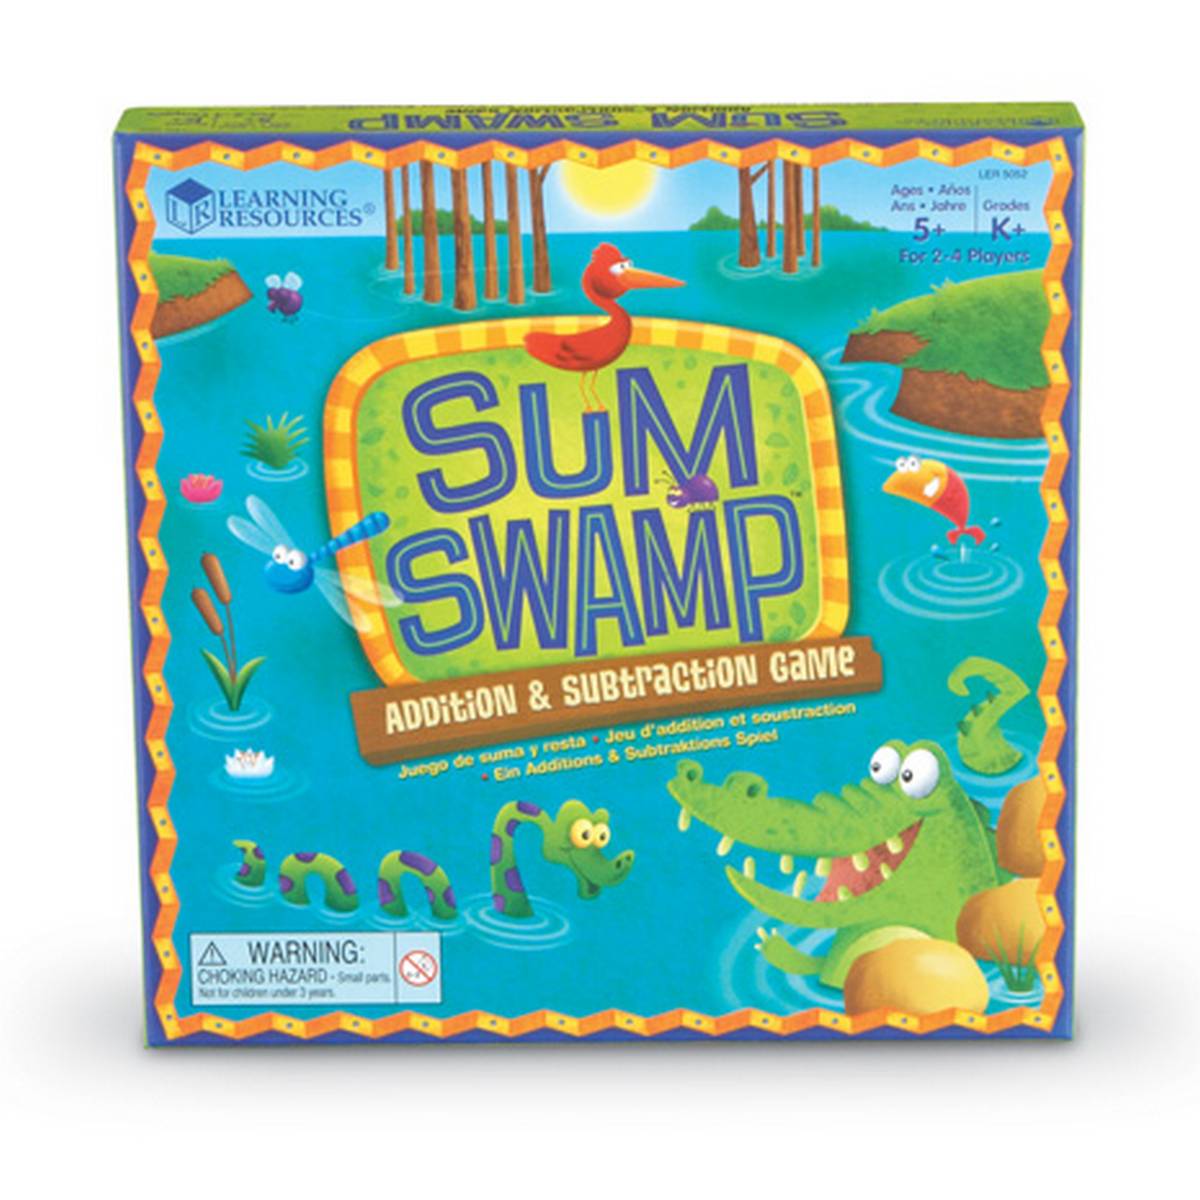 Sum Swamp - Addition & Subtraction Game